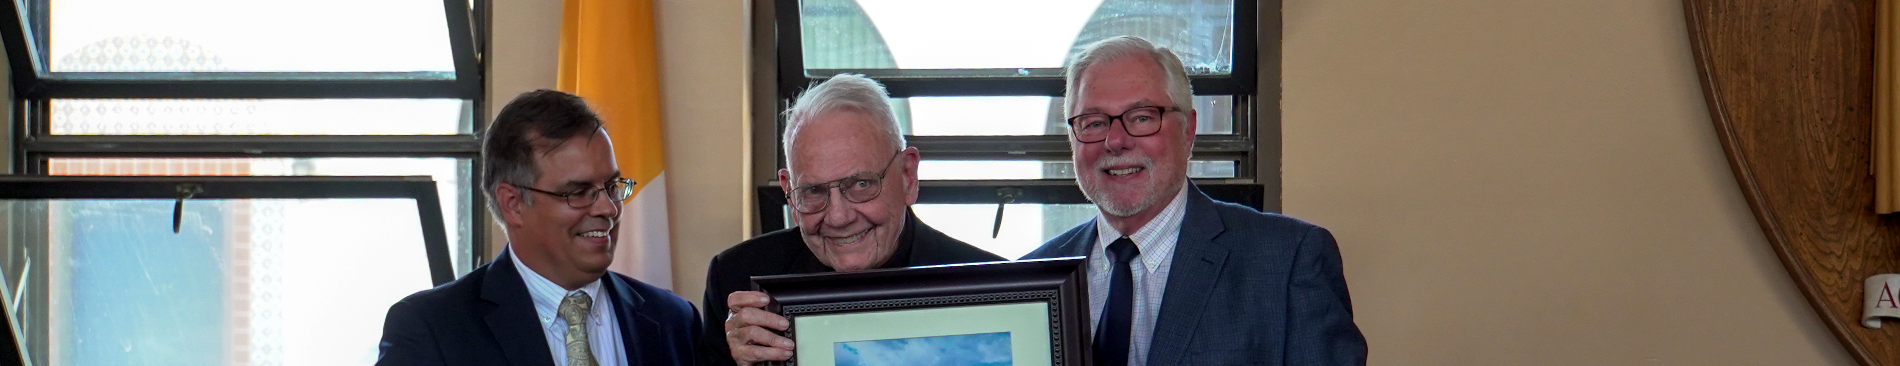 Dean Goyette, Fr. Buckley, and President McLean